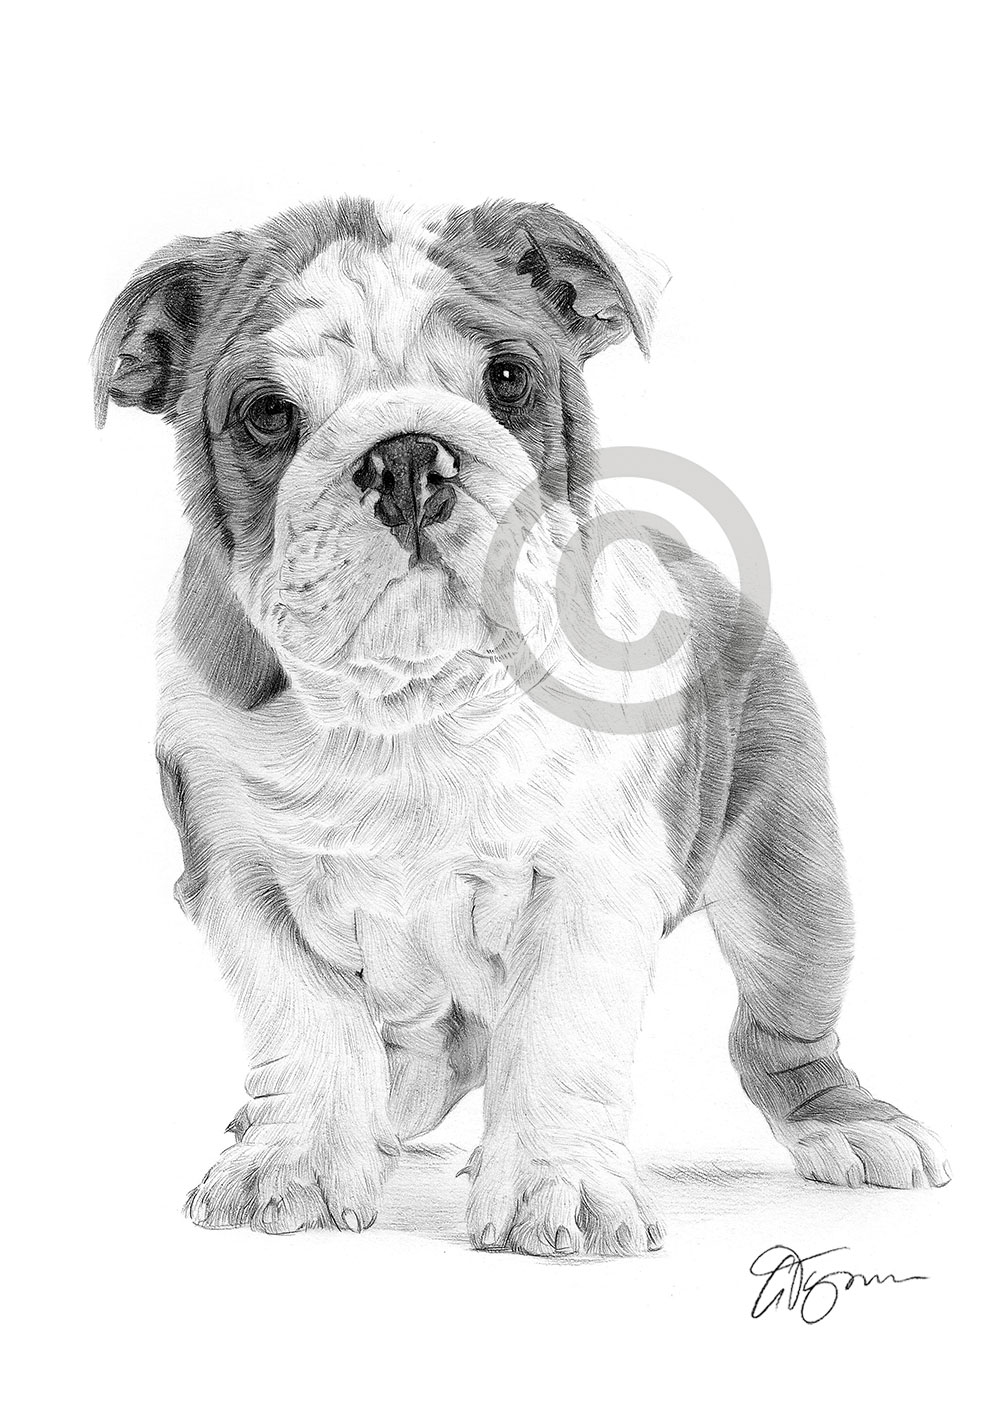 Pencil drawing of an English Bulldog puppy by artist Gary Tymon